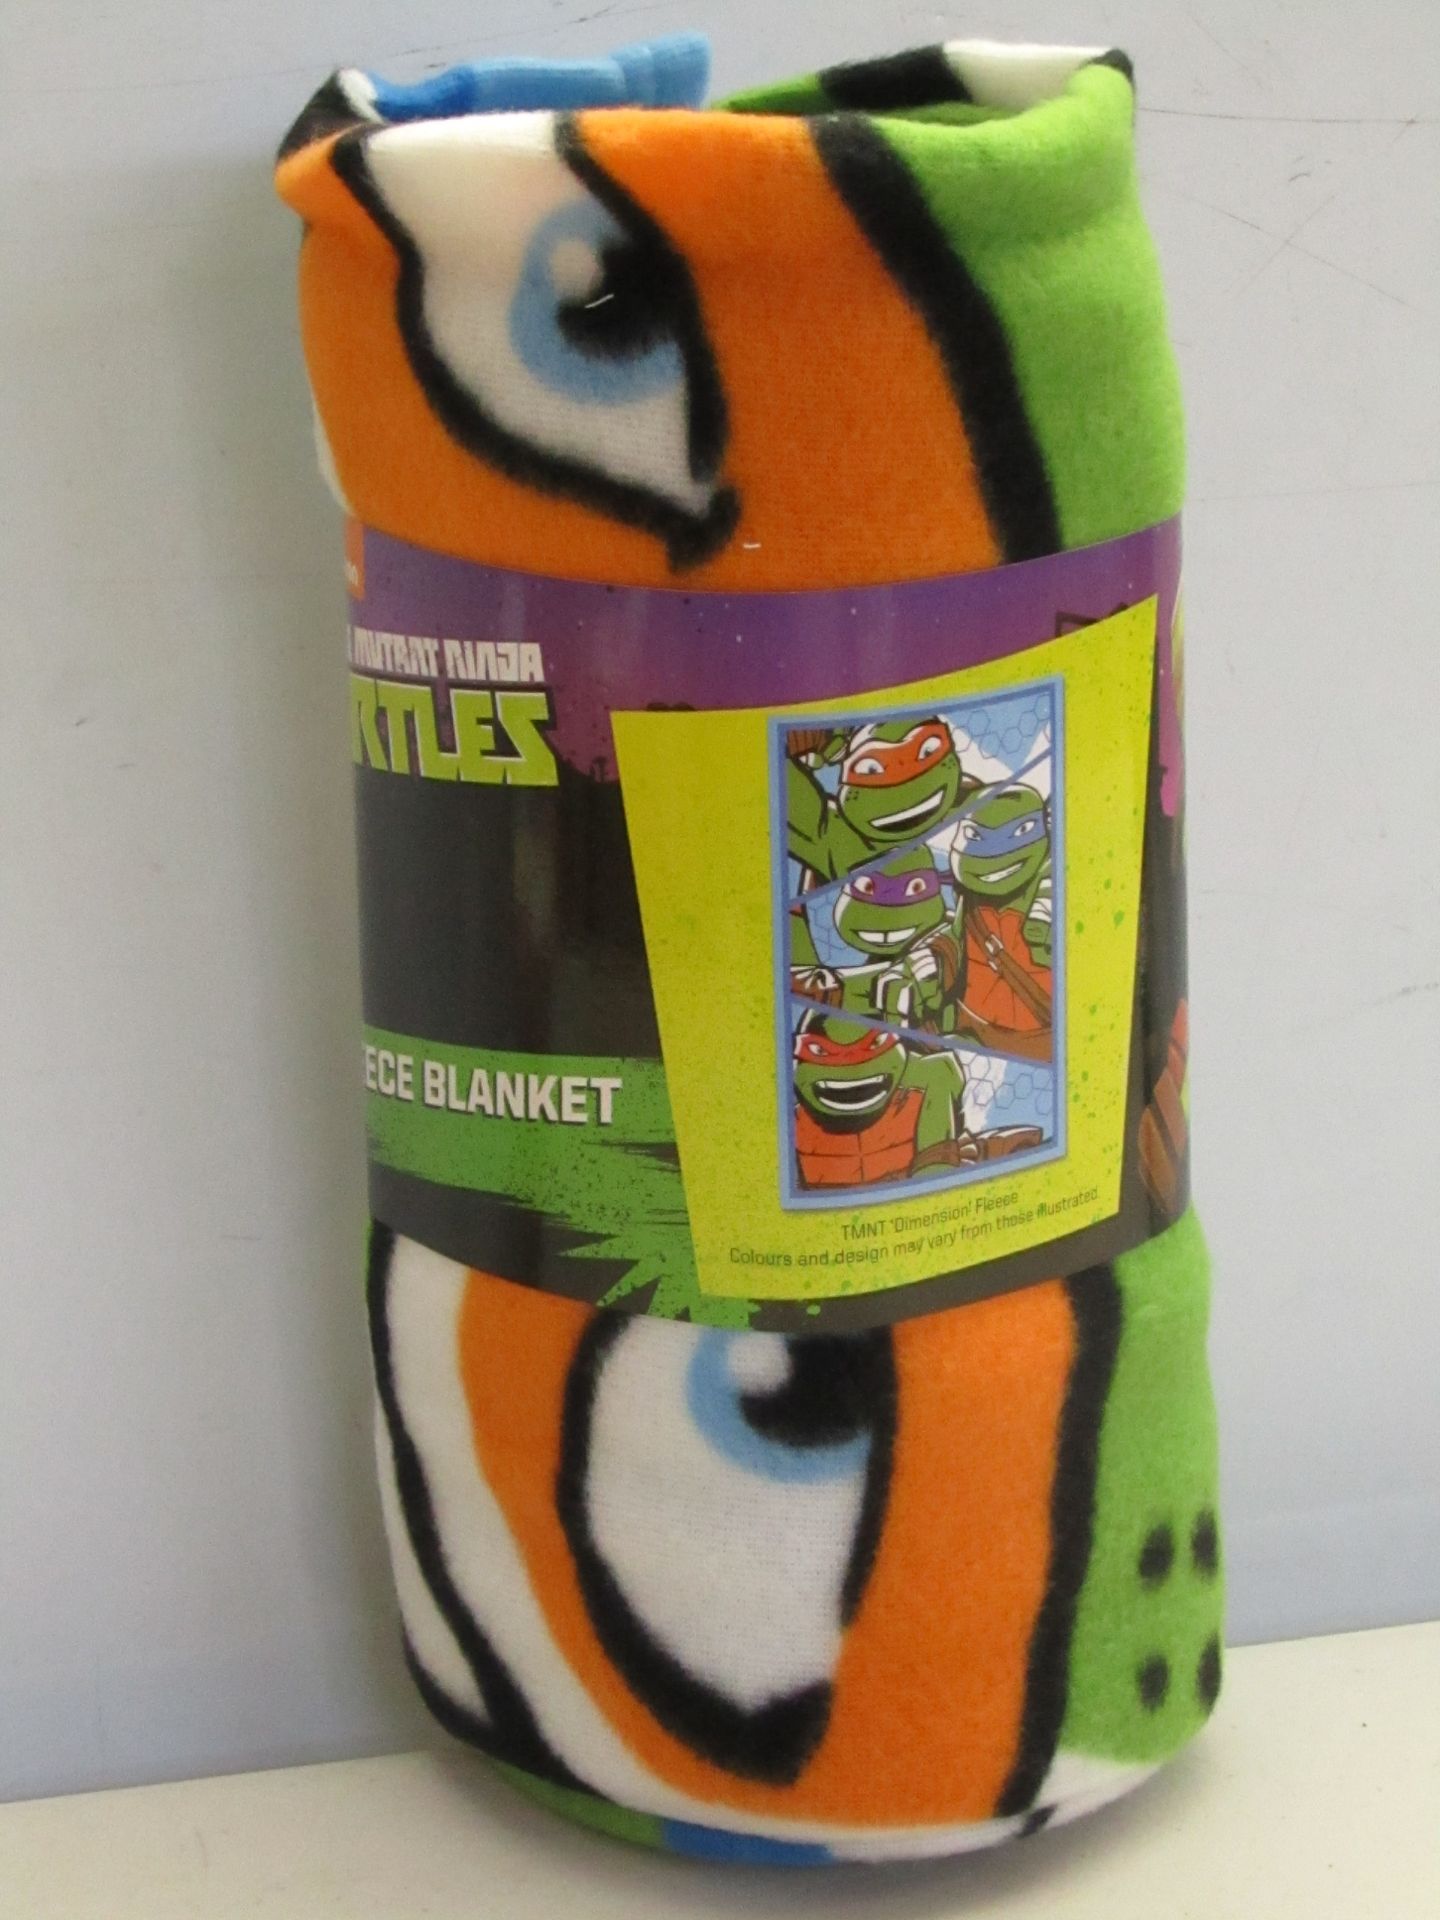 Character World Nickelodeon Teenage Mutant Ninja Turtles fleece blanket, 100 x 150 cm. New in